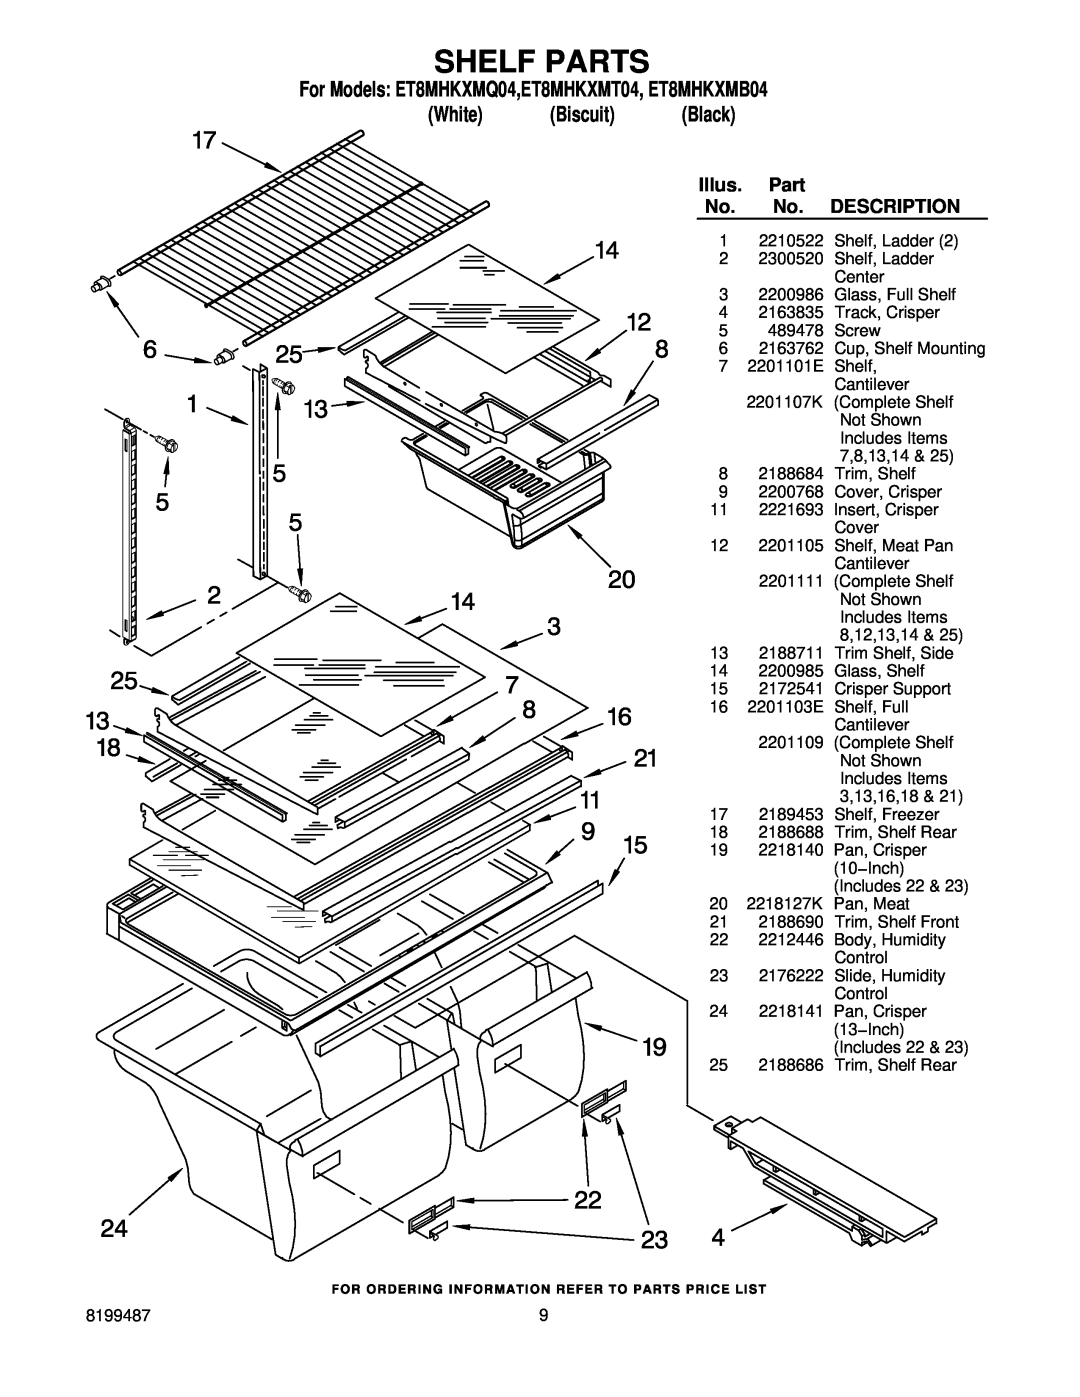 Whirlpool manual Shelf Parts, Illus, Description, For Models ET8MHKXMQ04,ET8MHKXMT04, ET8MHKXMB04, White Biscuit Black 